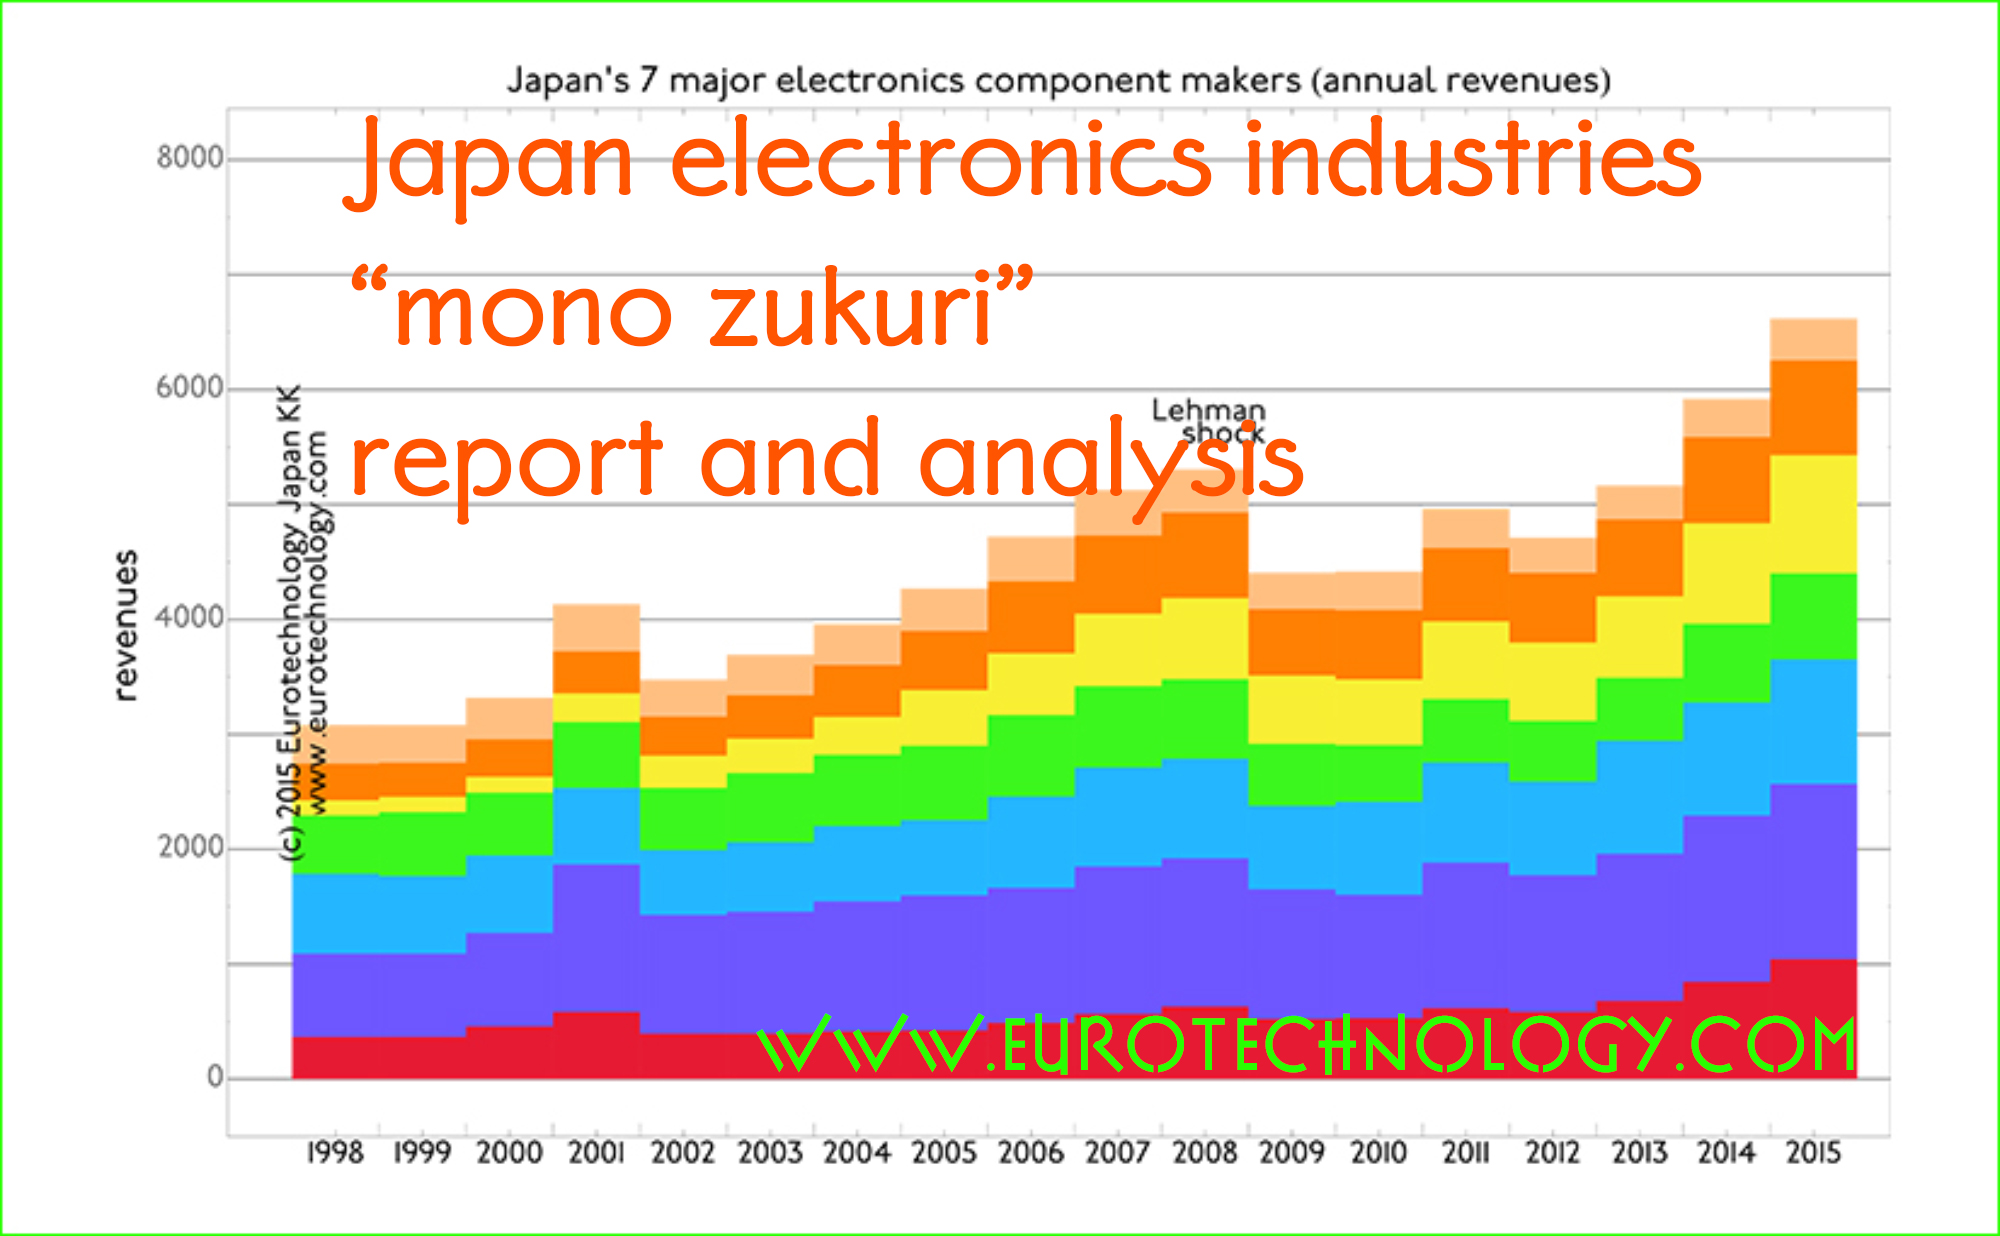 eurotechnology report on Japan's electronics industries - mono zukuri